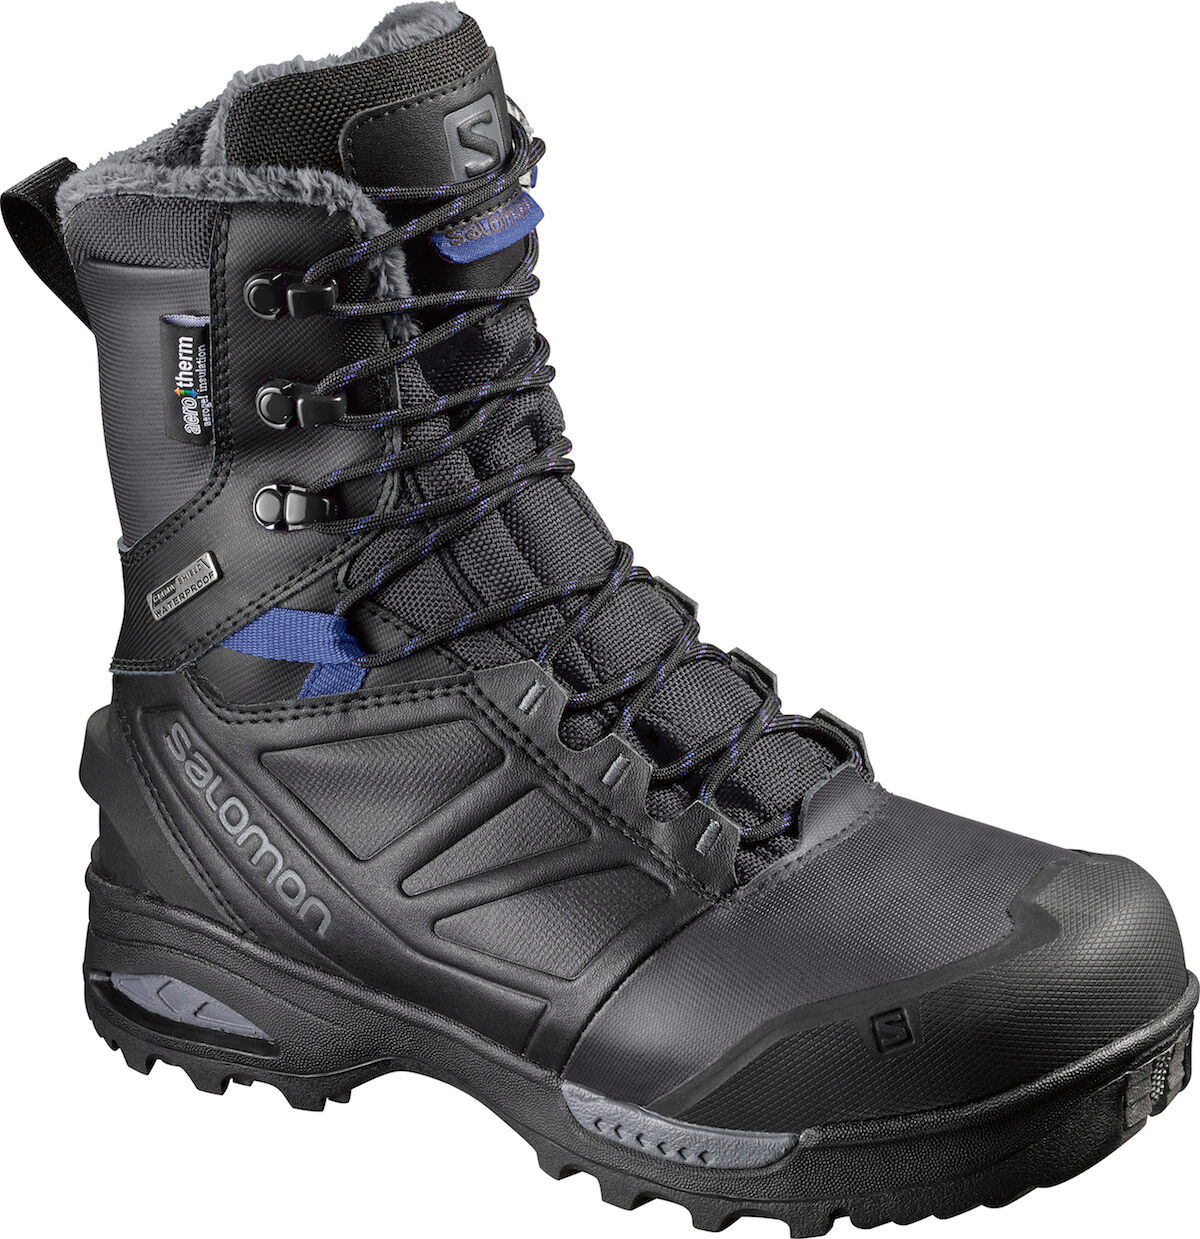 Salomon - Toundra Pro CSWP W - Hiking Boots - Women's